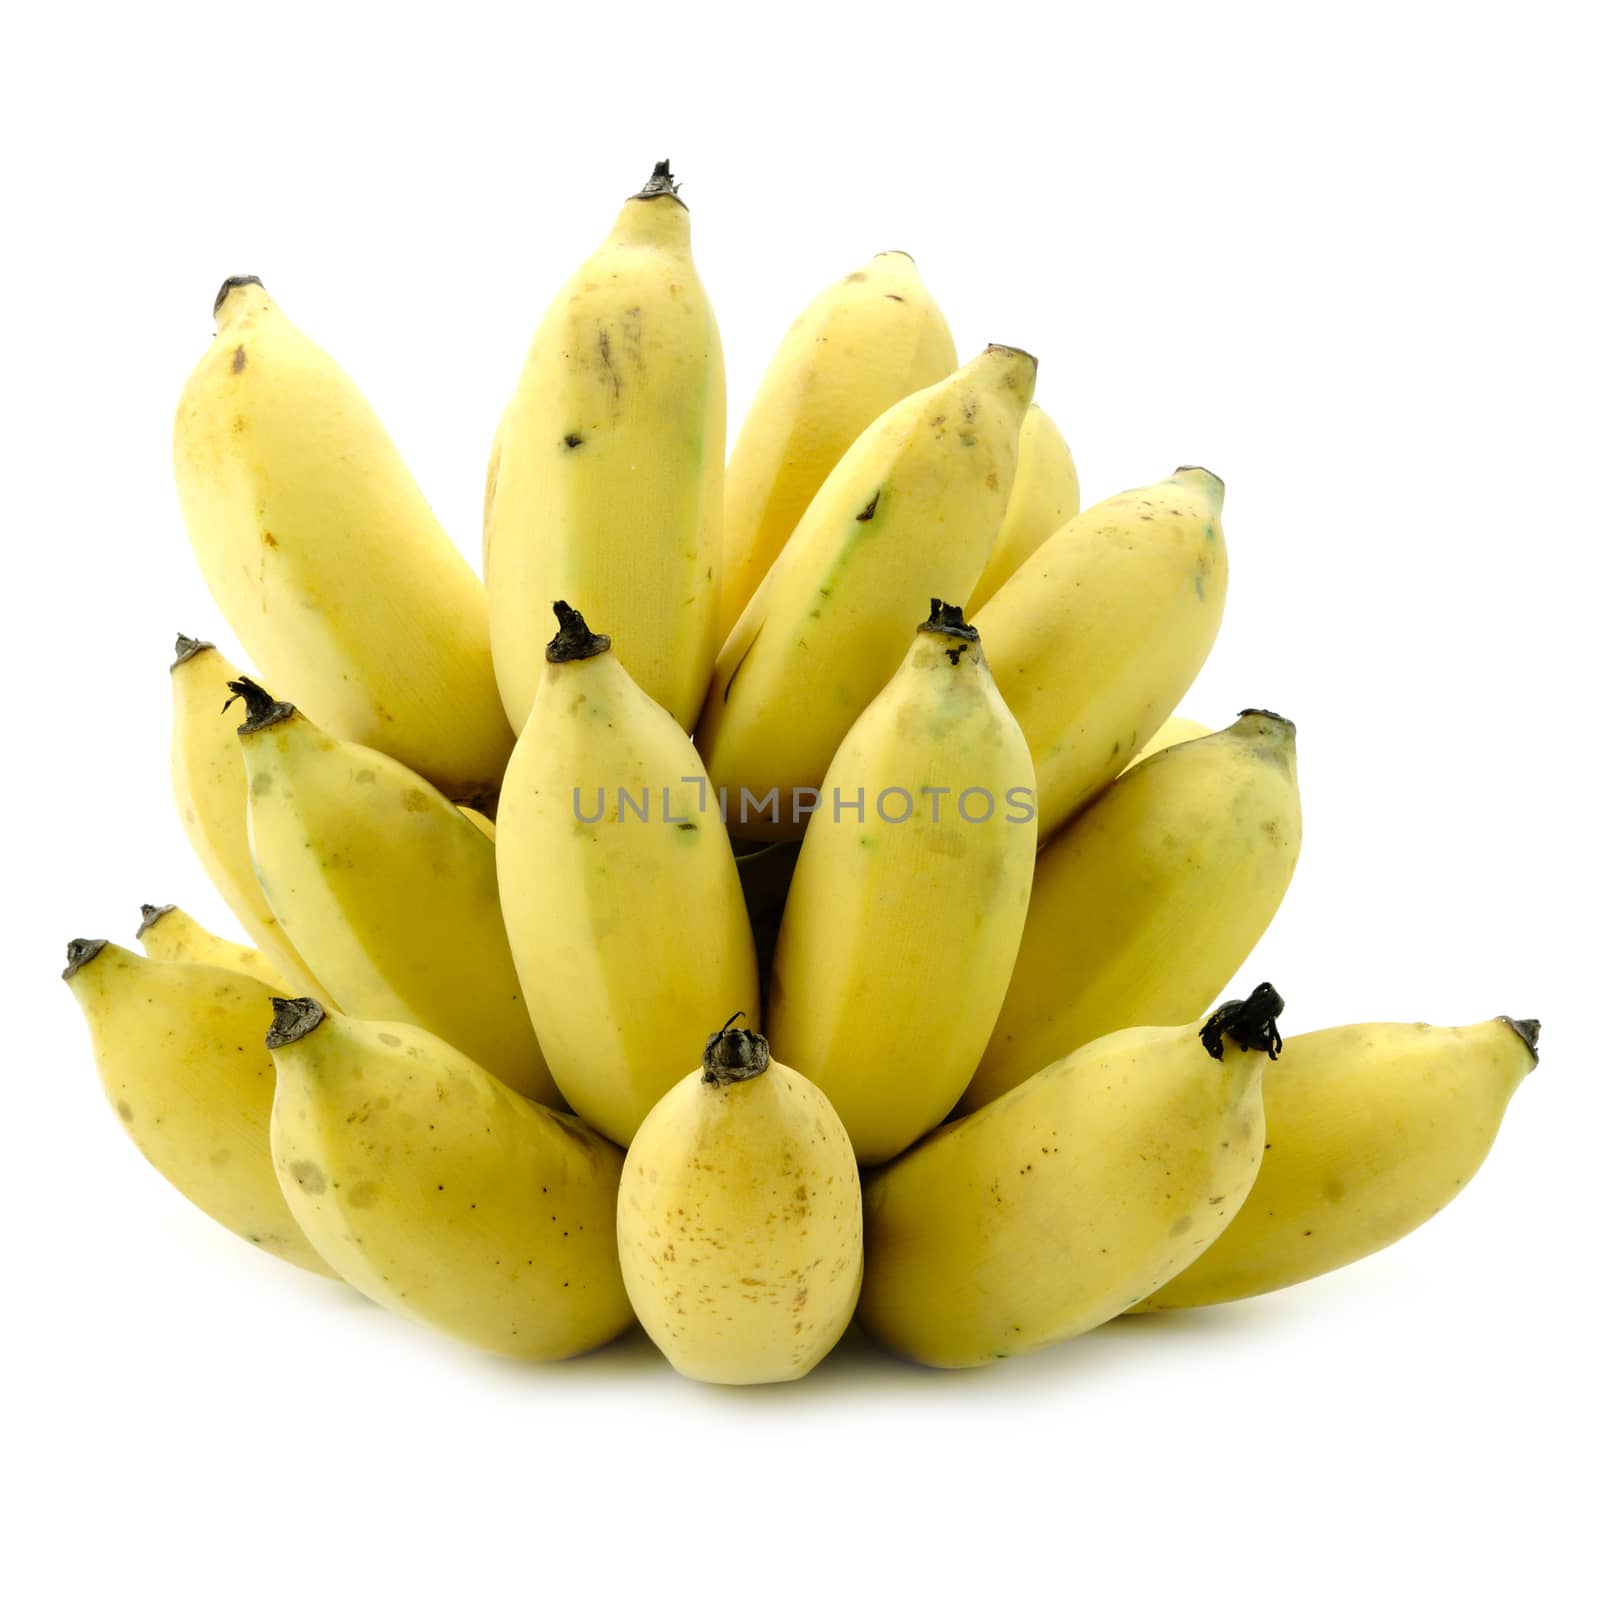 ripe banana on white background.